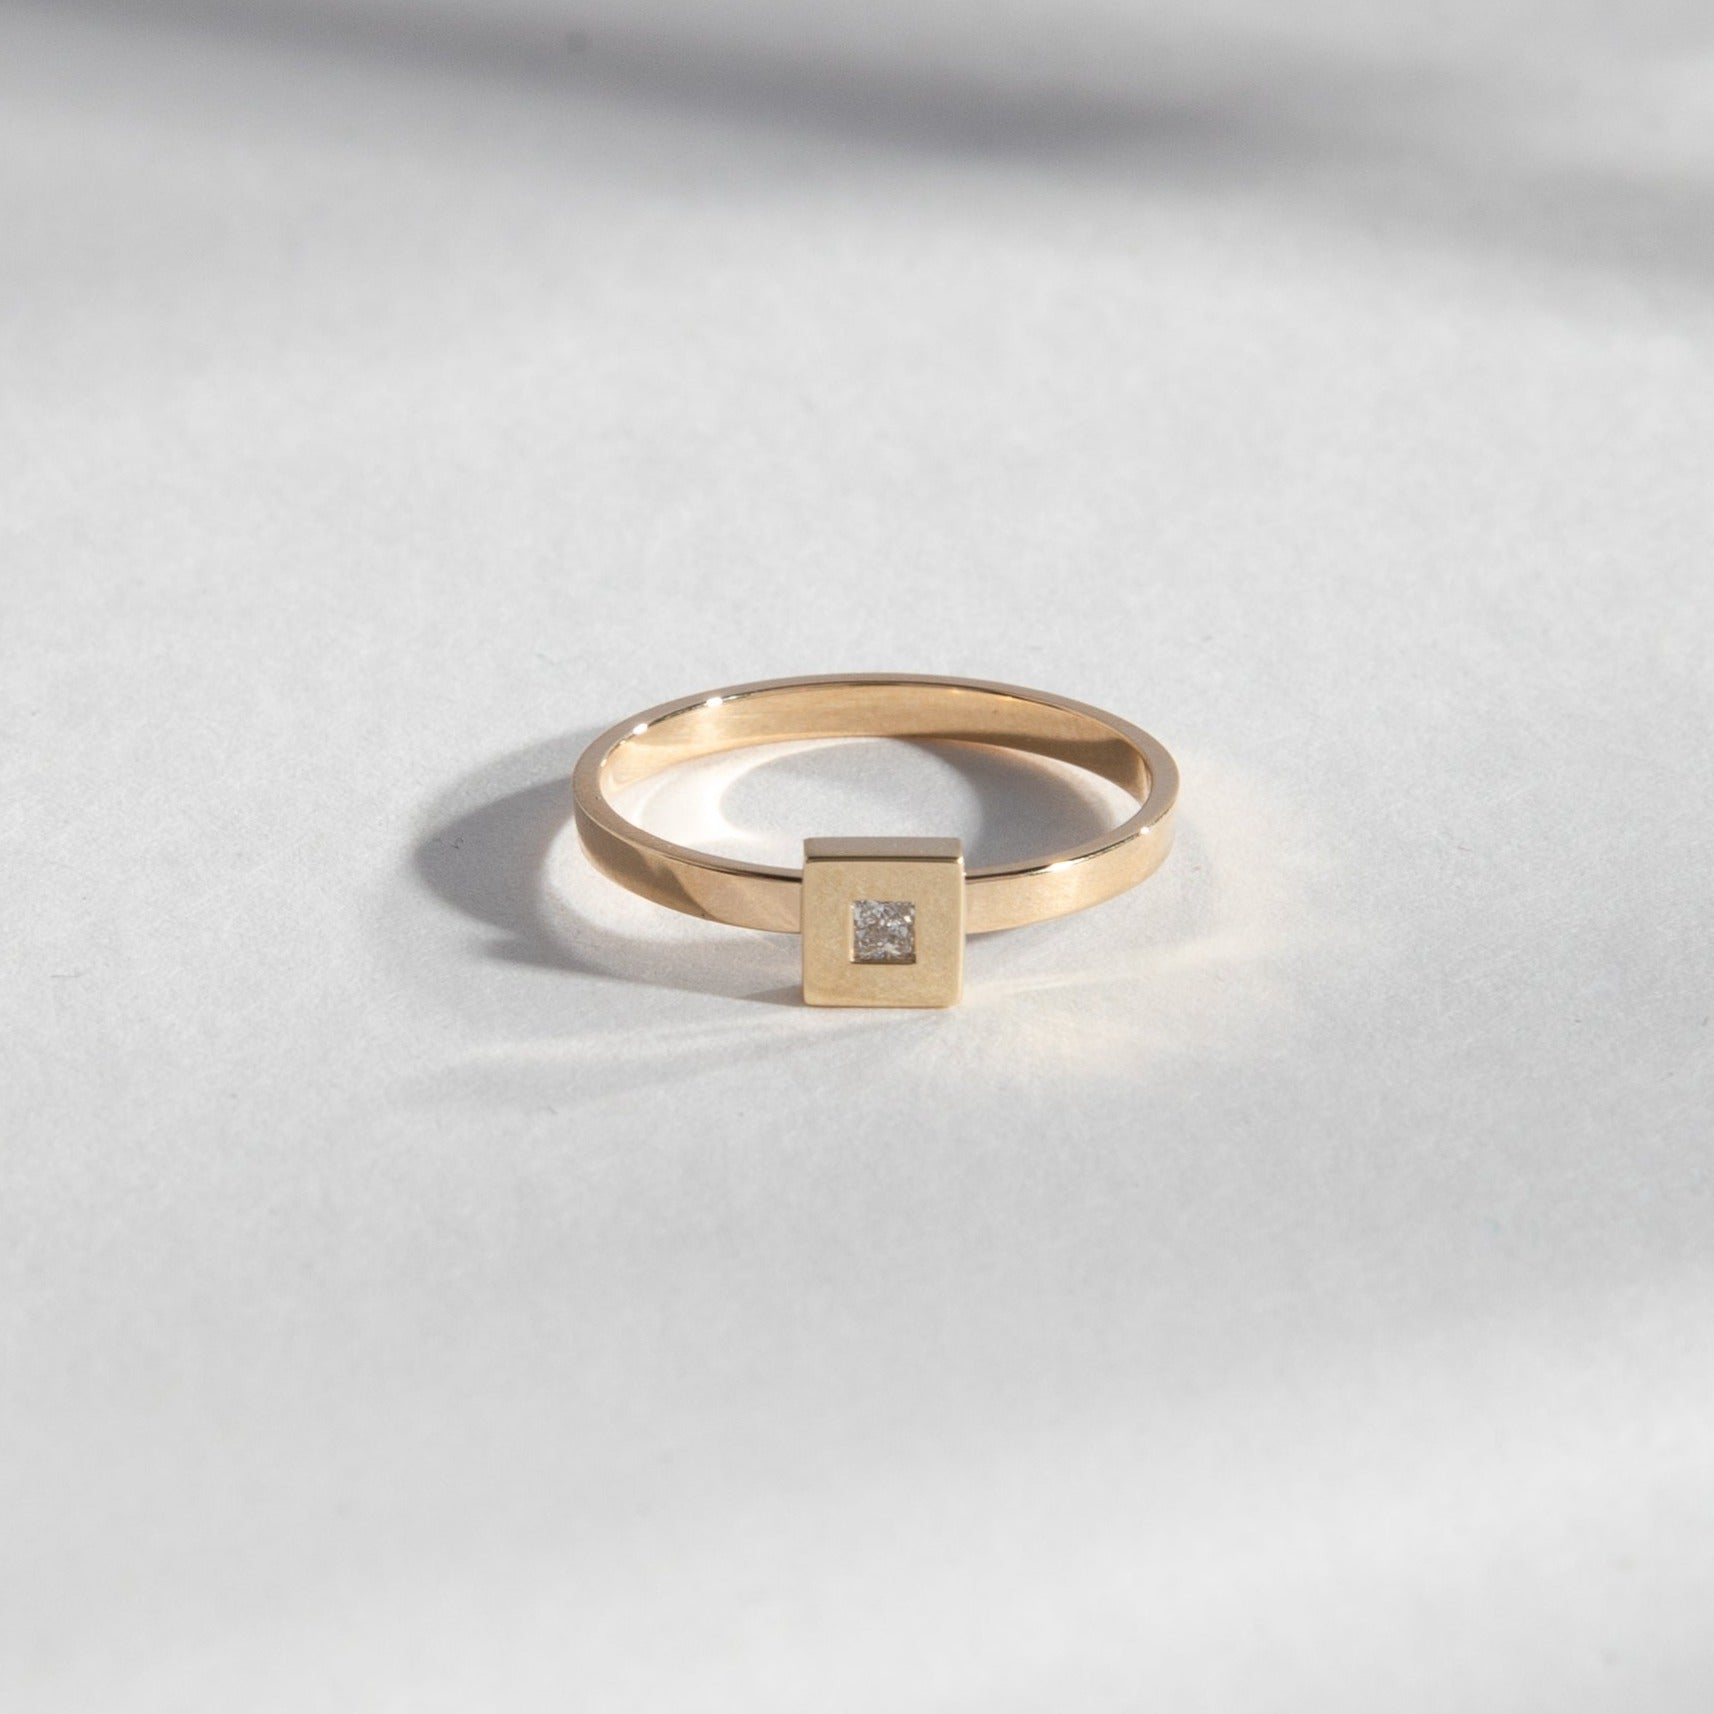 Sada Alternative Ring in 14k Gold set with lab-grown diamonds By SHW Fine Jewelry NYC